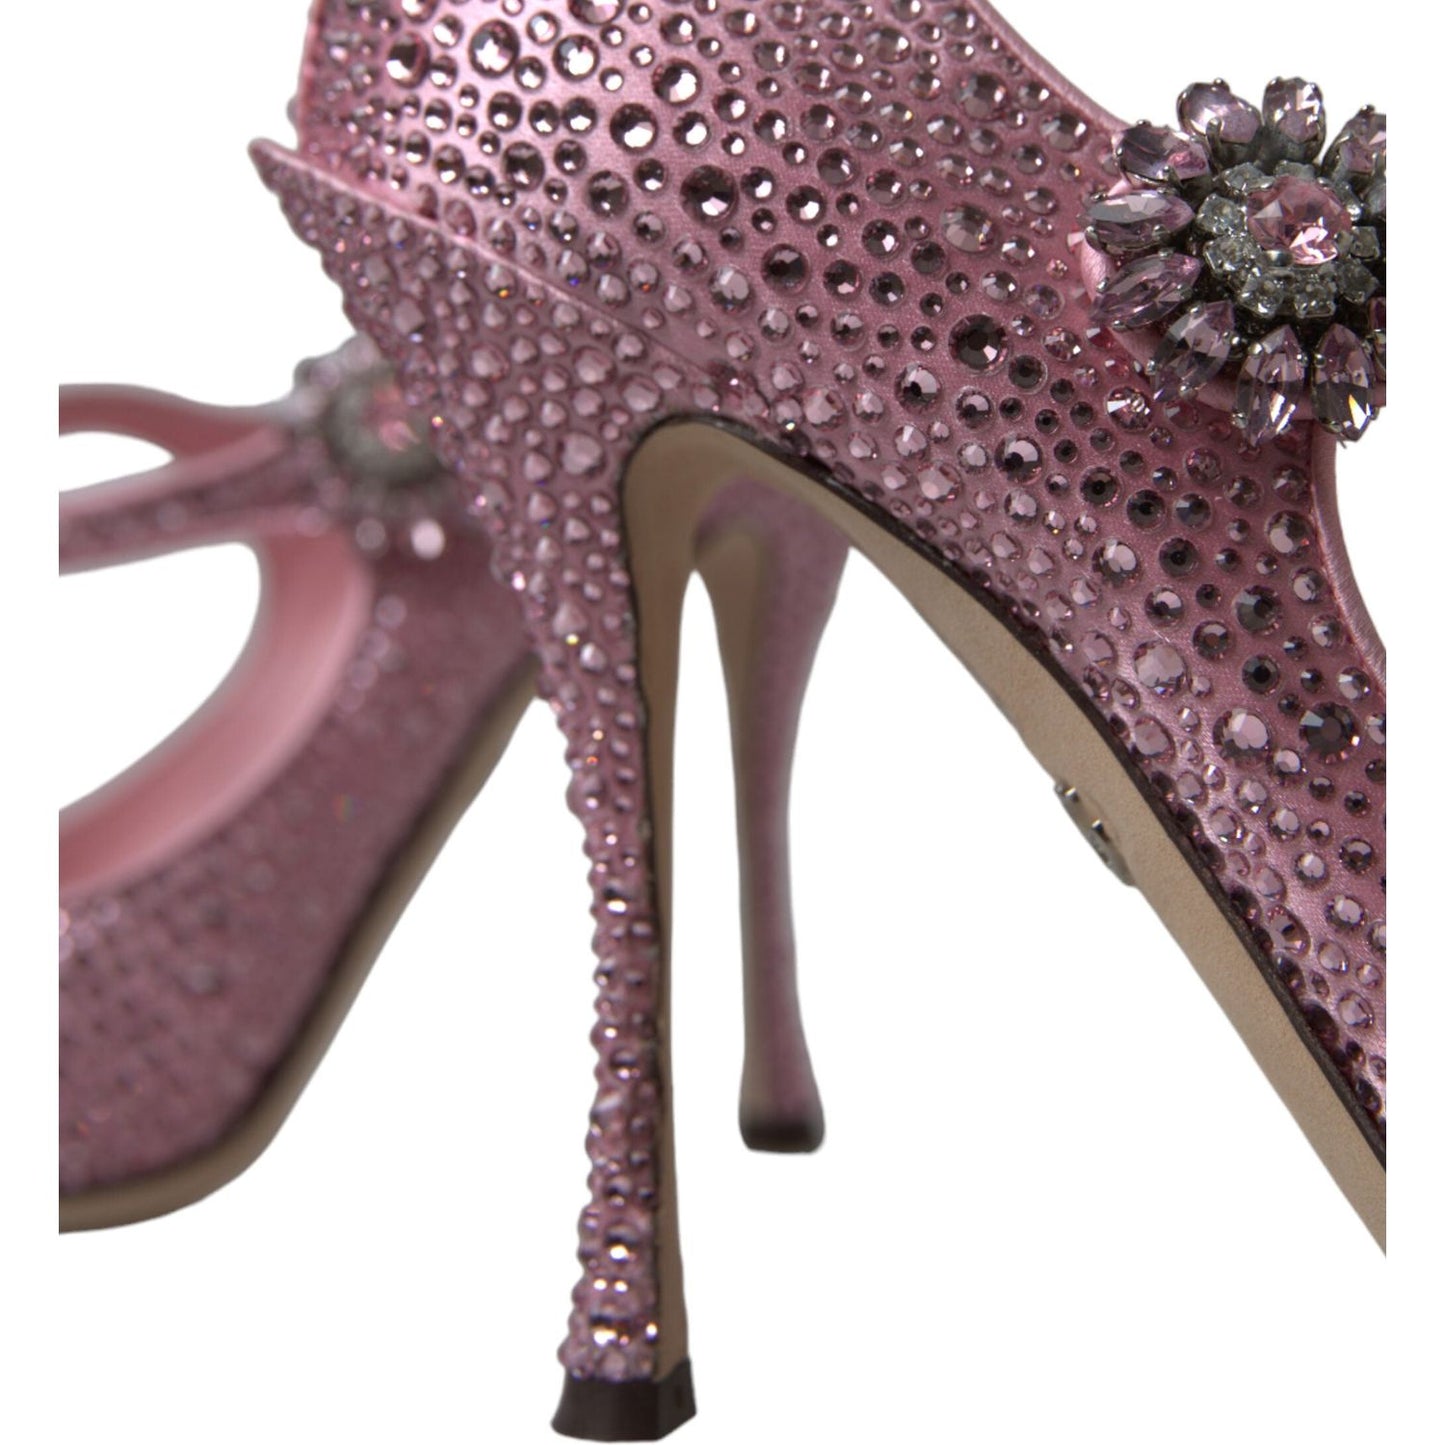 Dolce & Gabbana Enchanting Pink Crystal Pumps pink-strass-crystal-heels-pumps-shoes